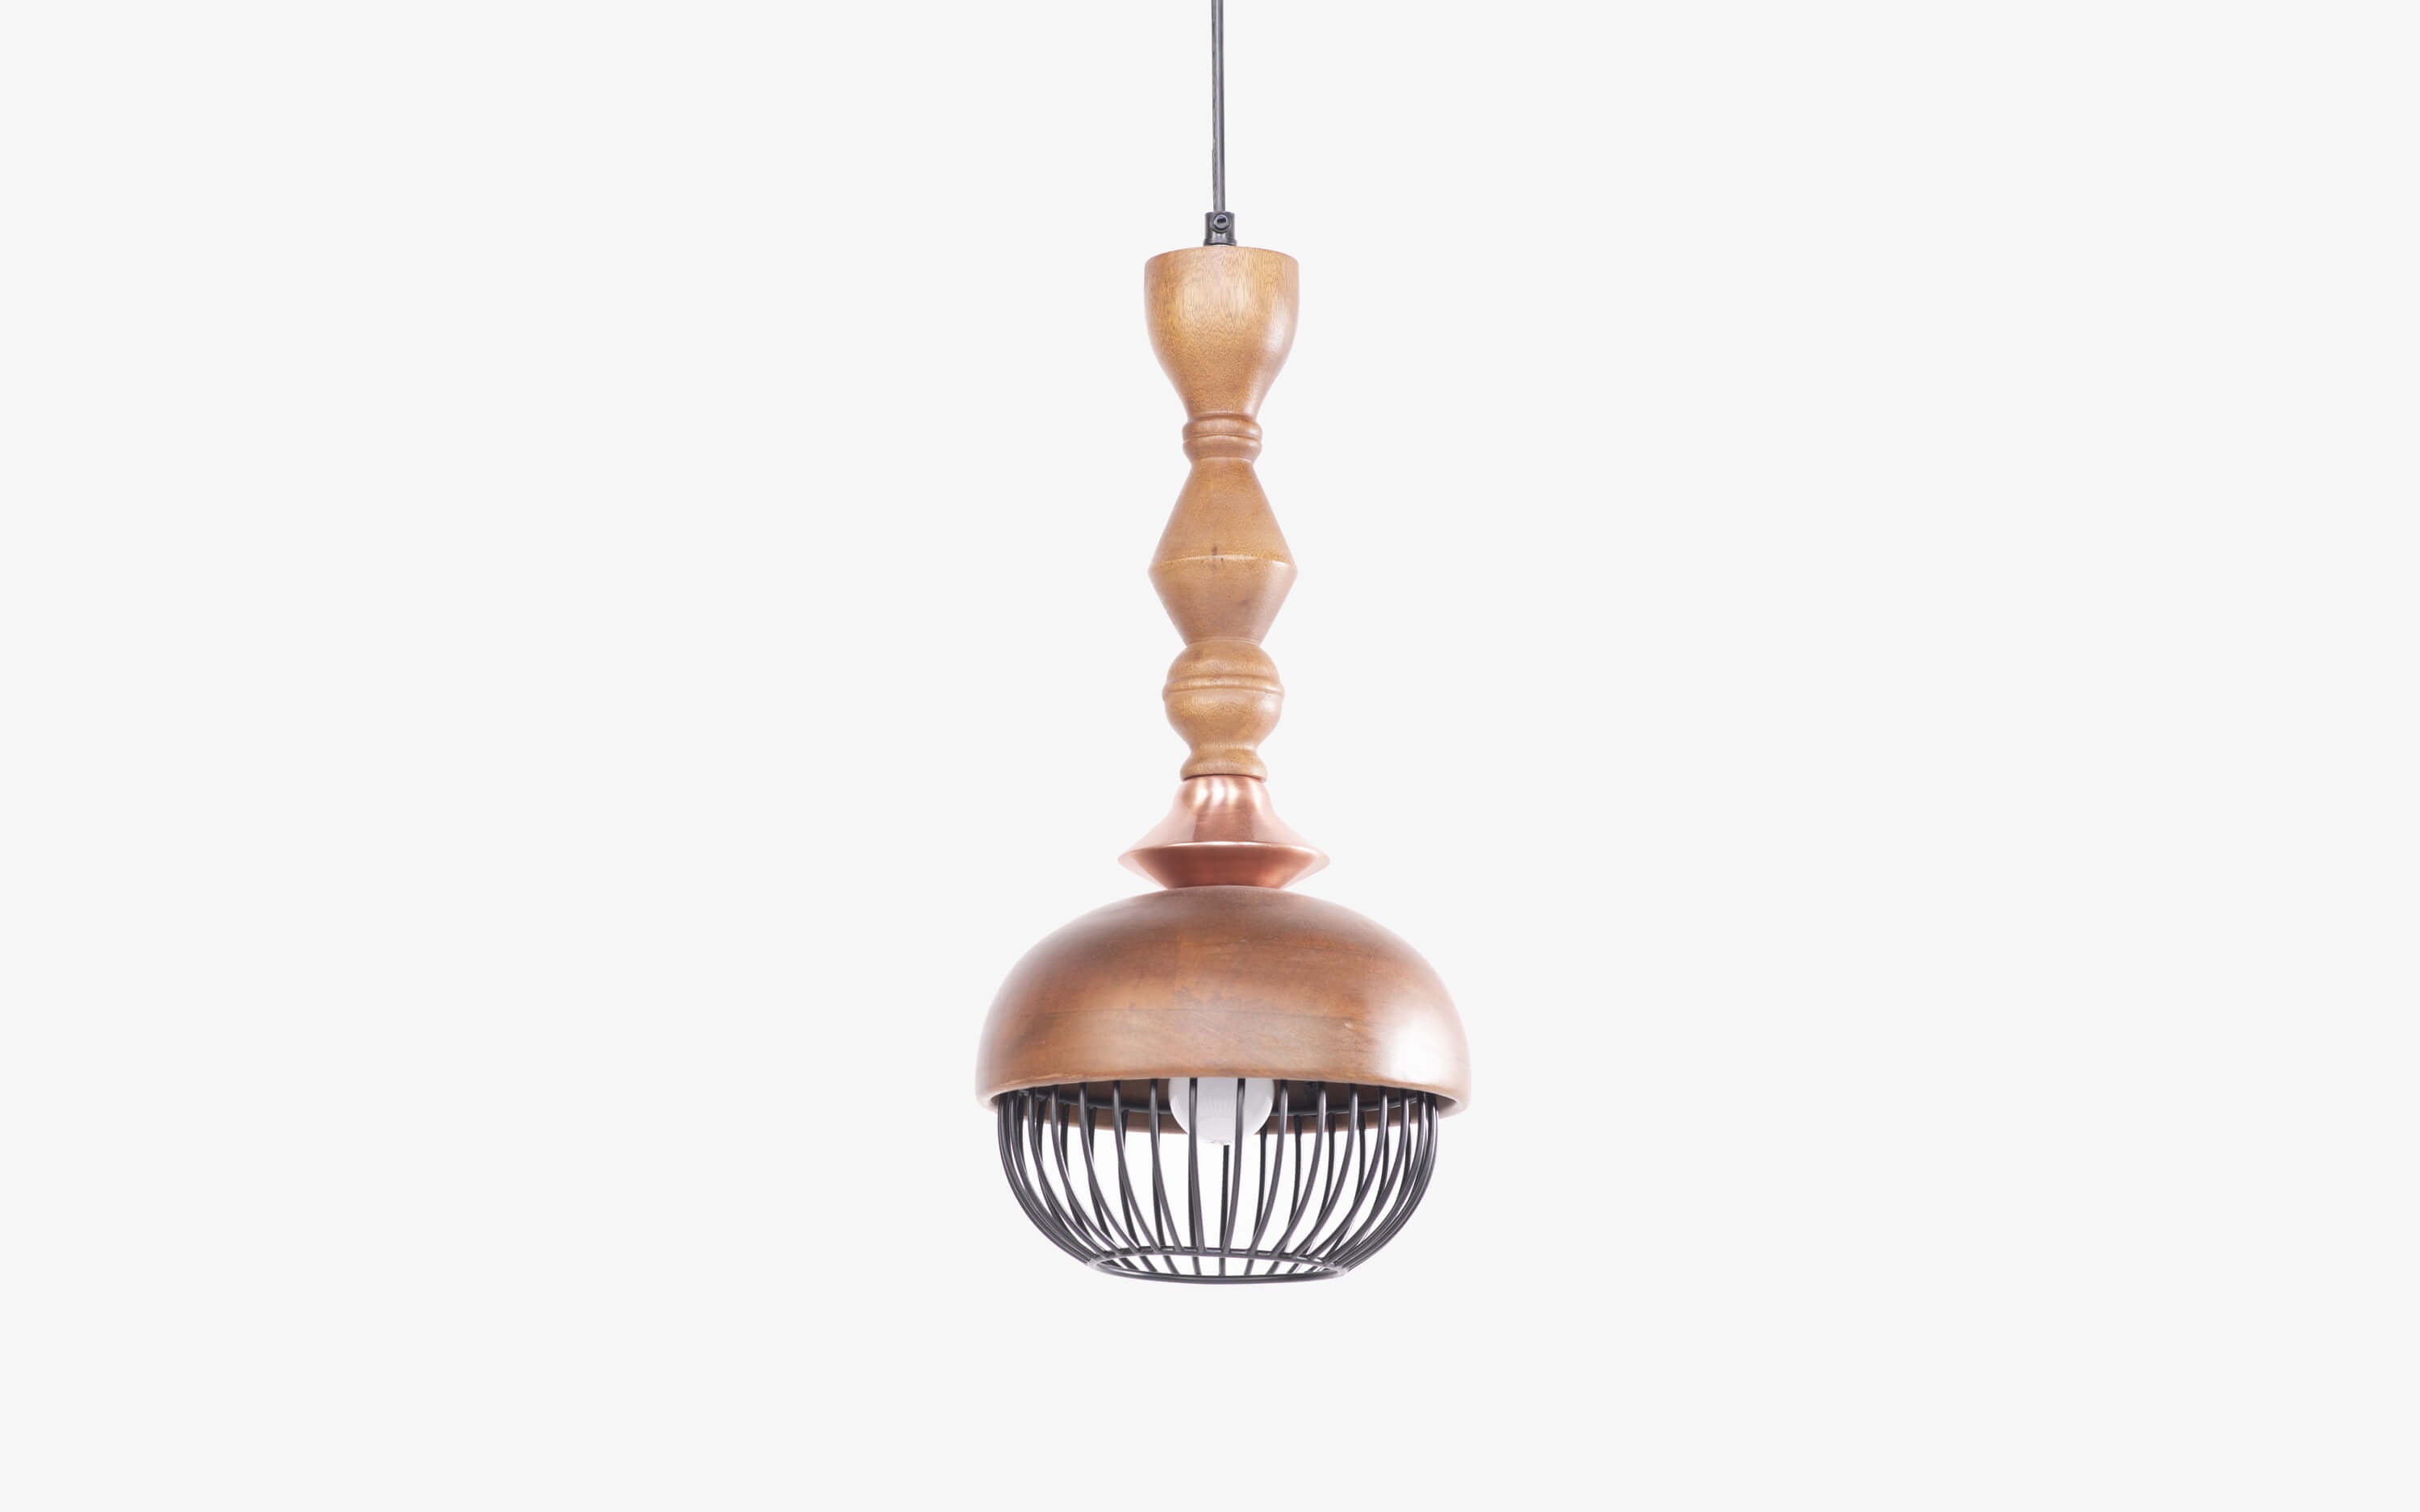 Jodha Copper Hanging Lamp Tall - Orange Tree Home Pvt. Ltd.